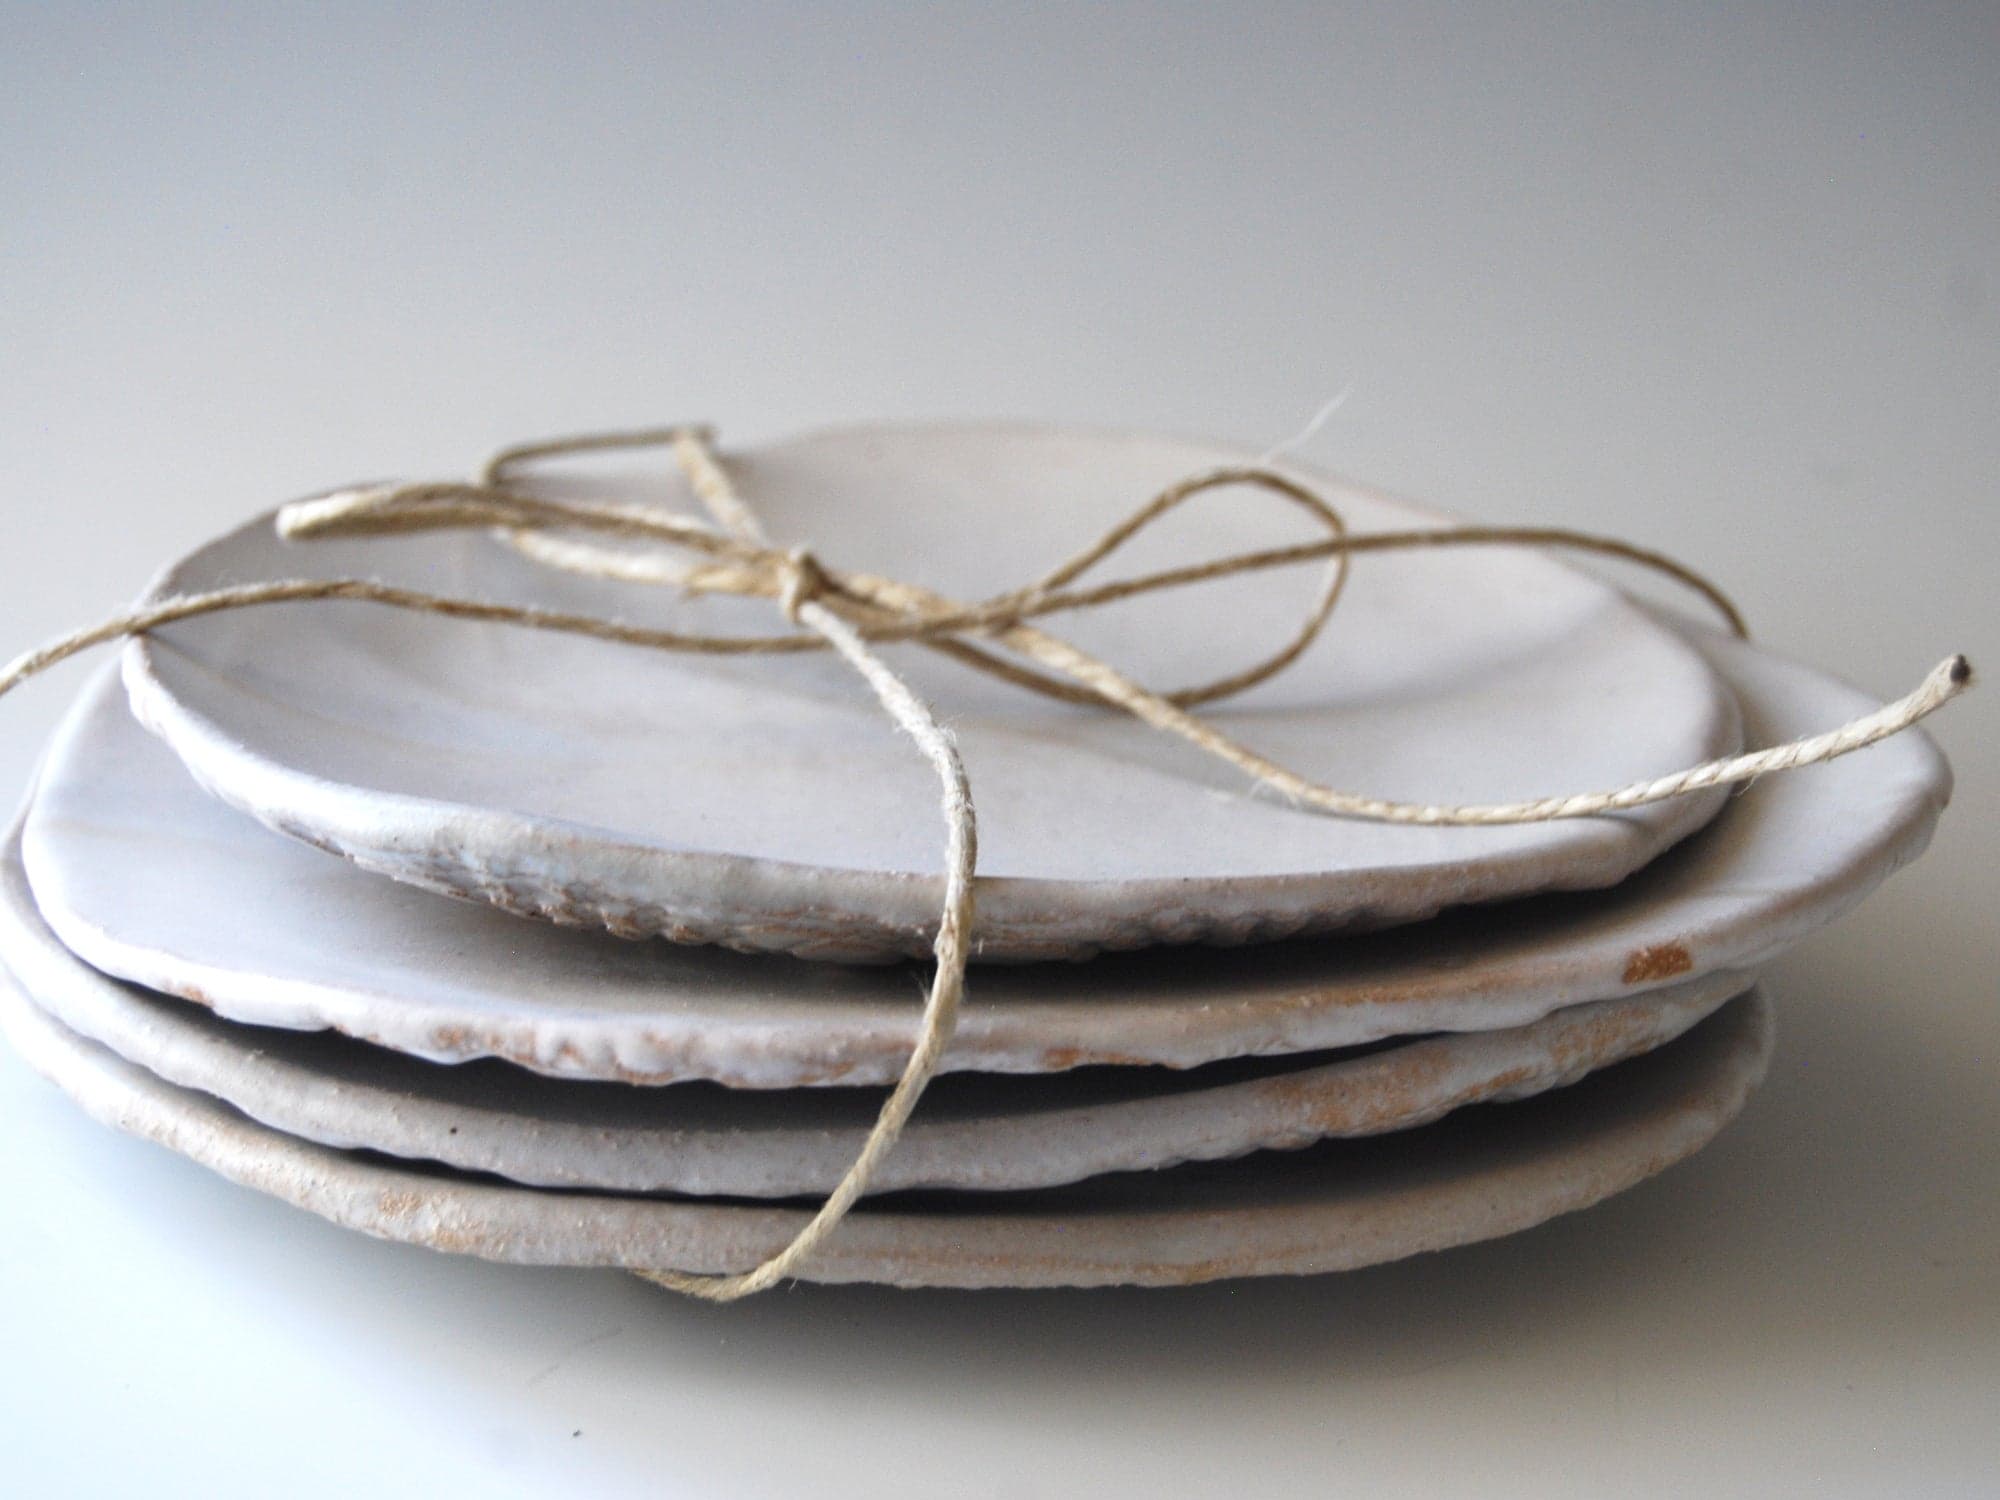 Handmade, artisan white ceramic dessert plates with lace pattern